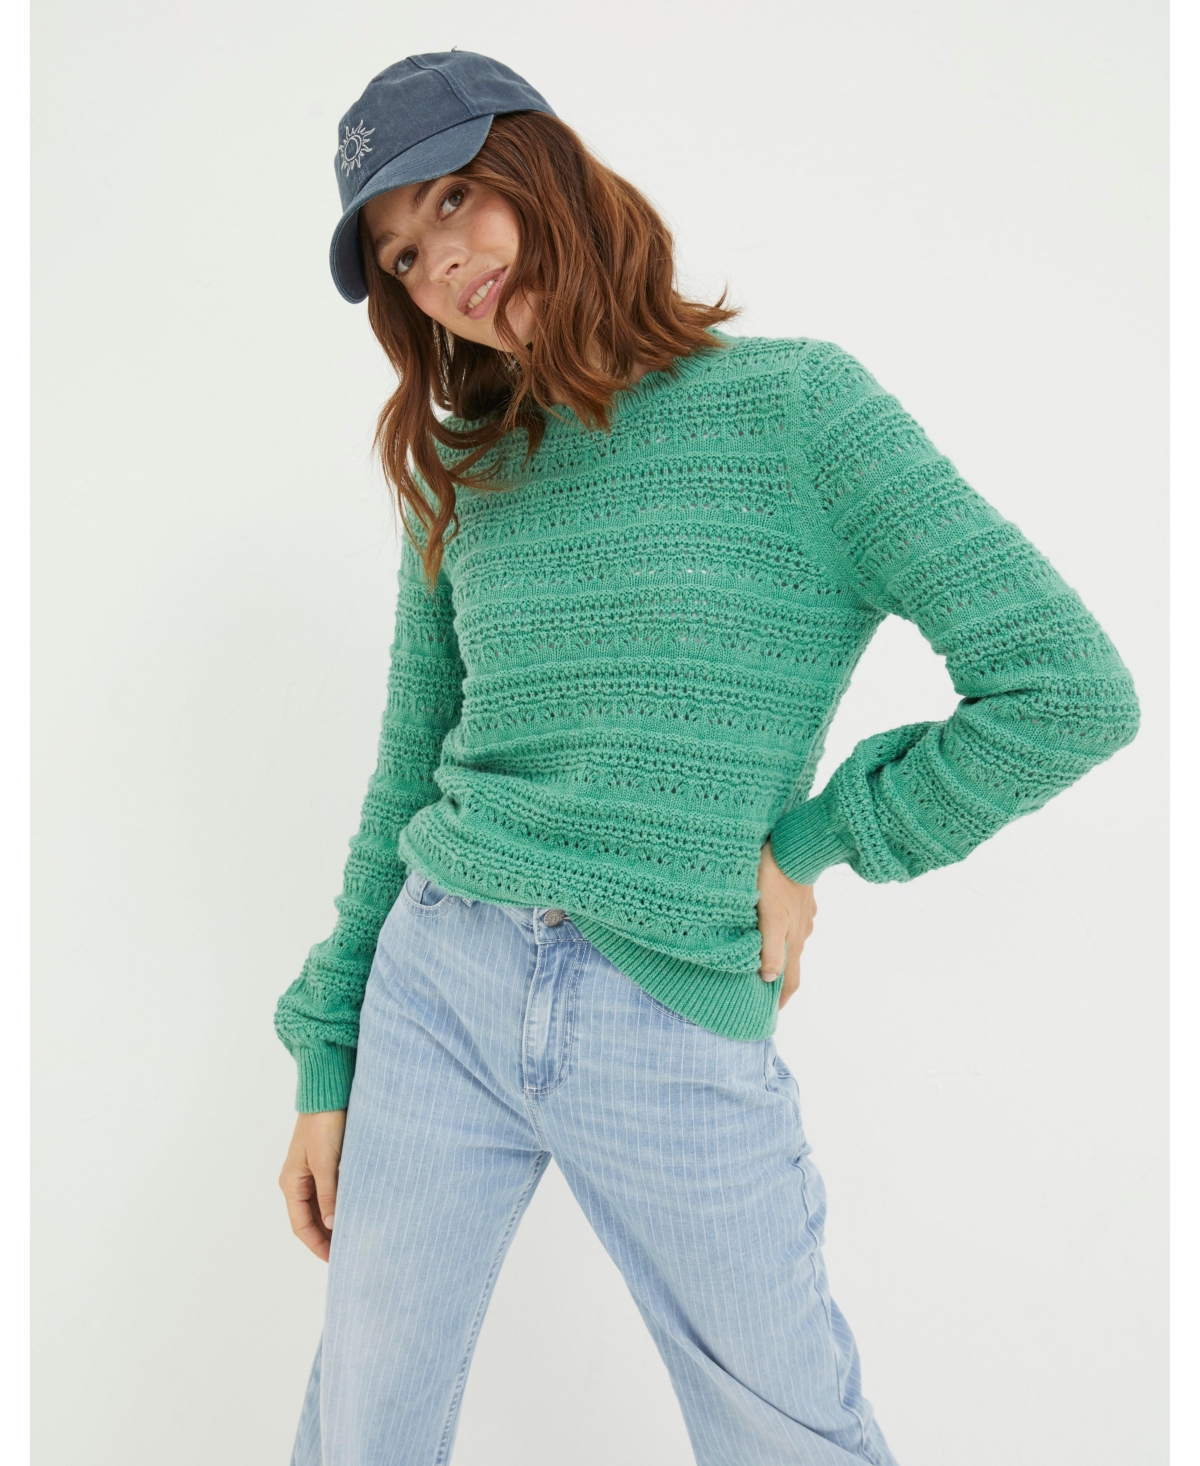 Fat Face Women's Adrienne Crew Sweater - Bright green